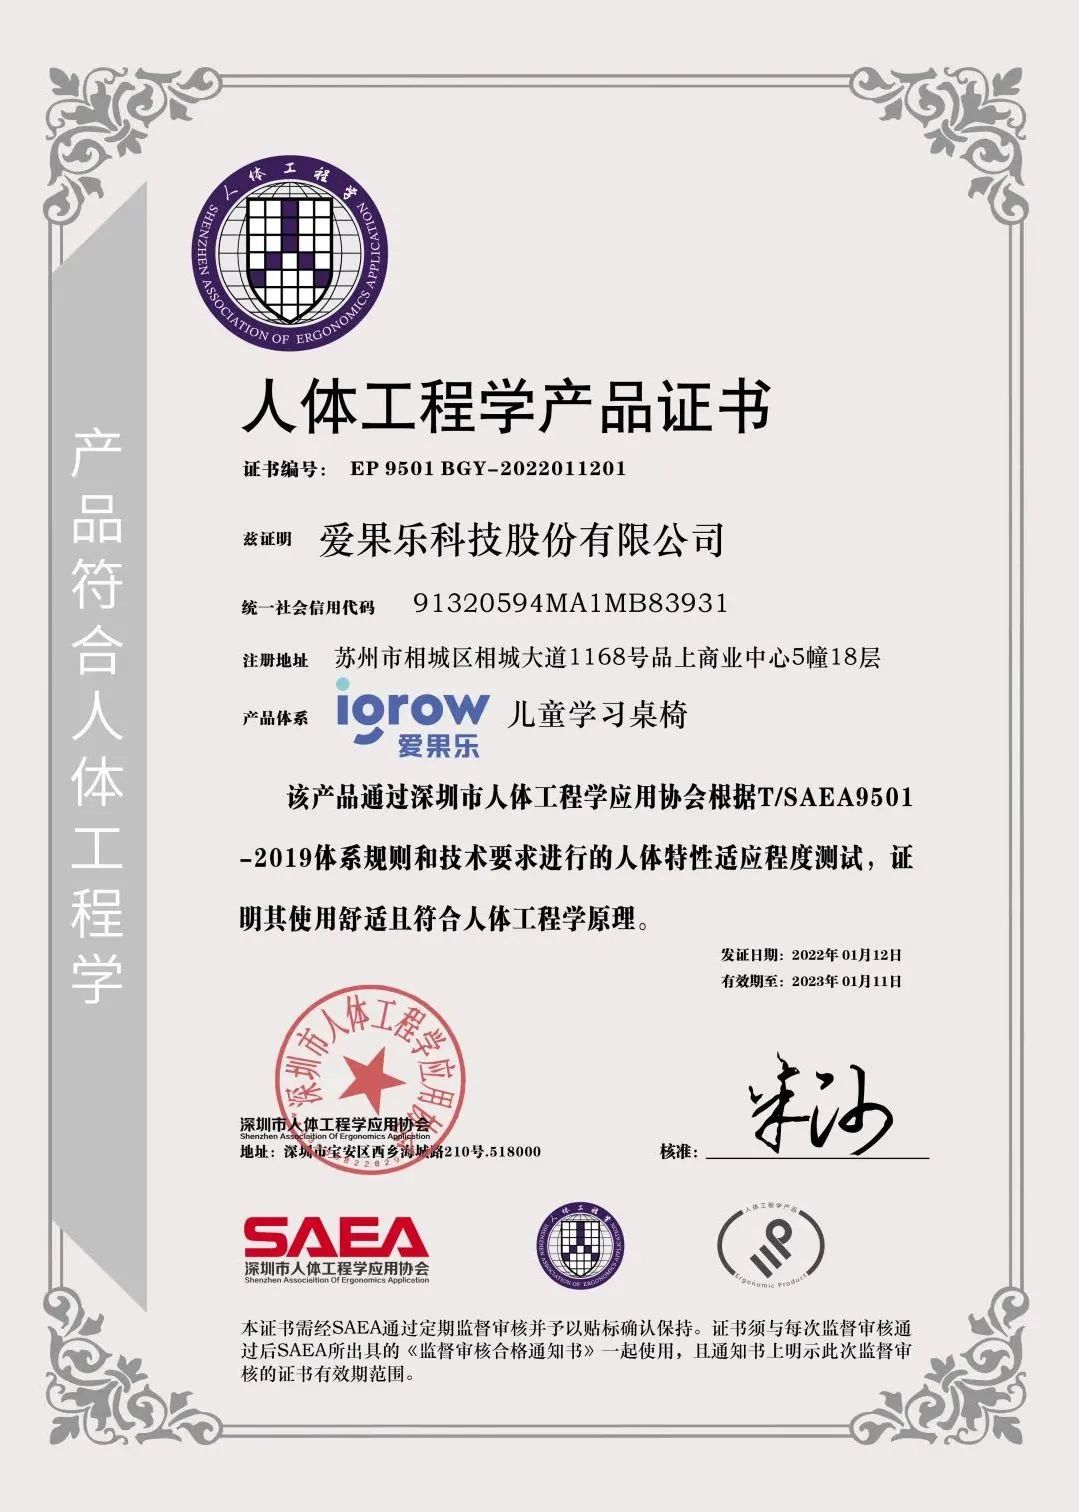 Ergonomic product certificate